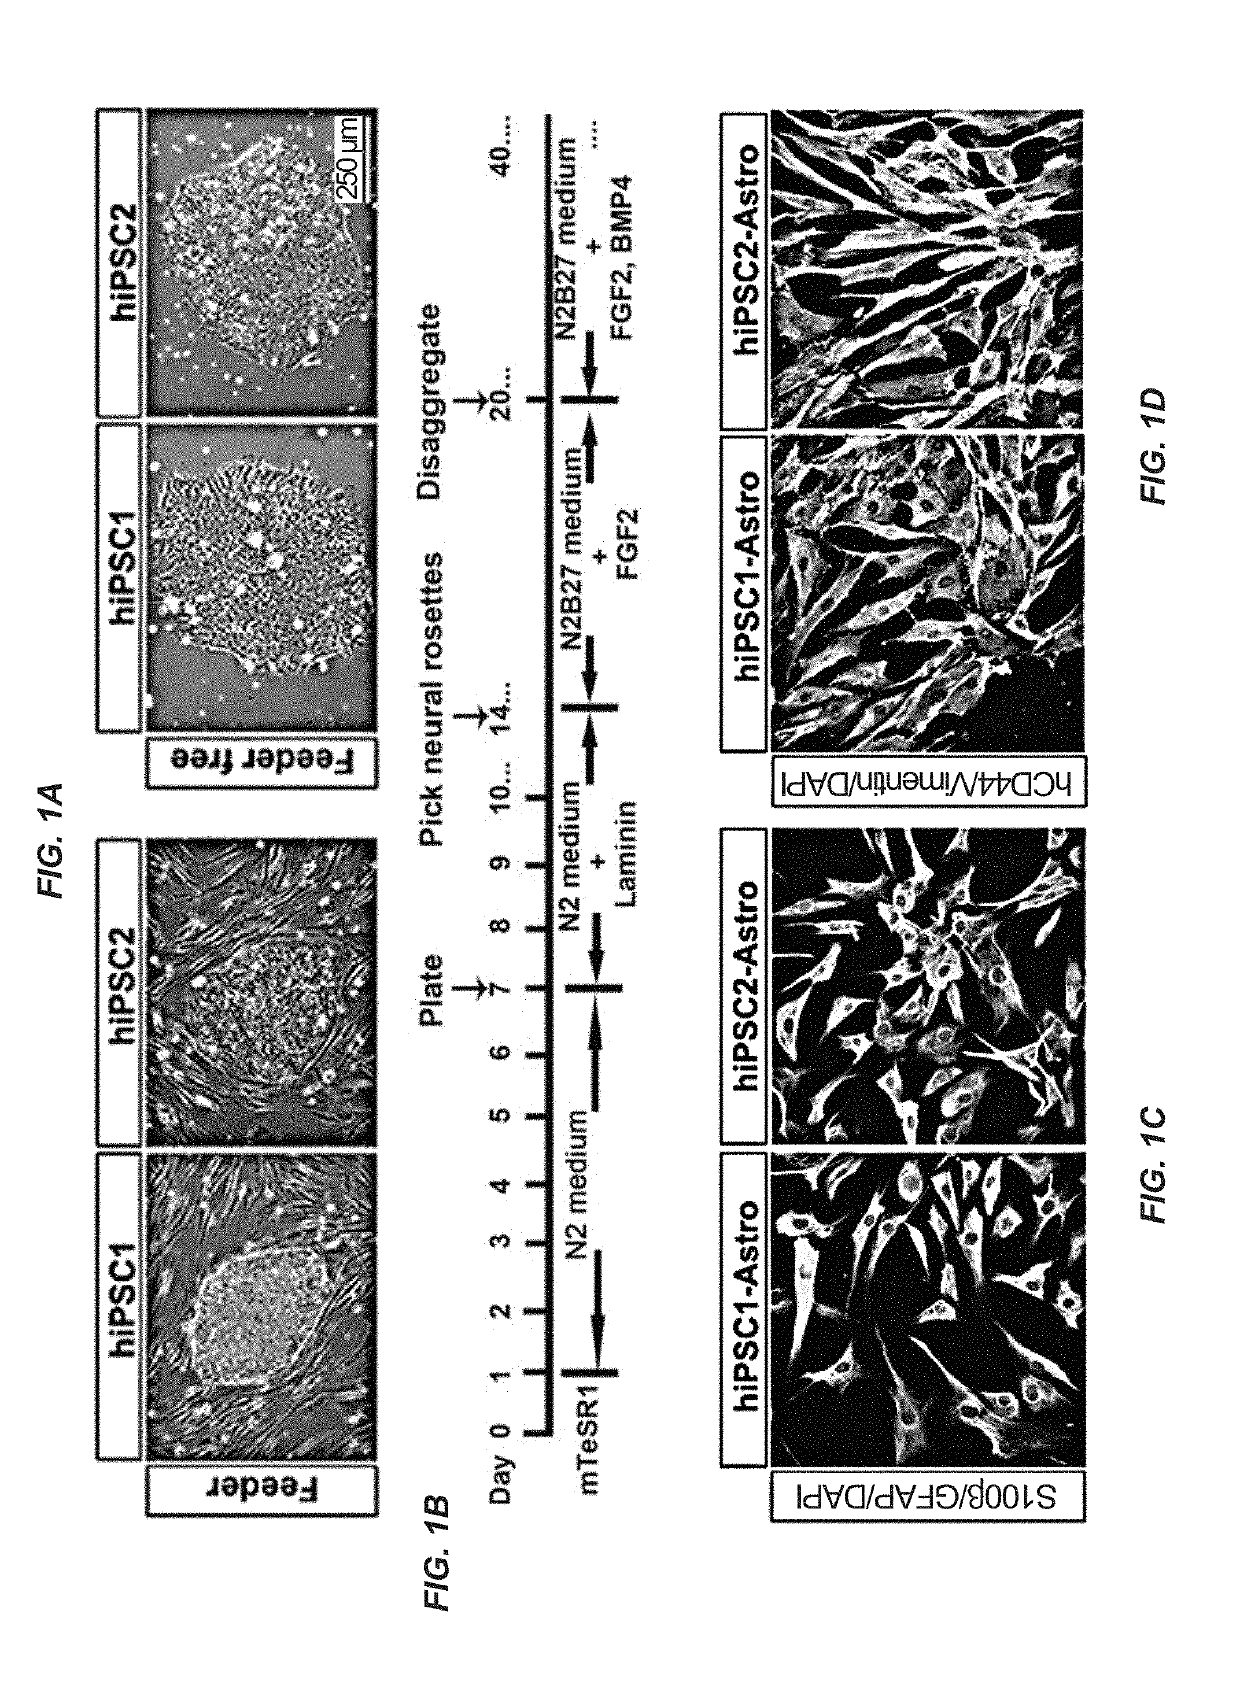 Methods for promoting oligodendrocyte regeneration and remyelination